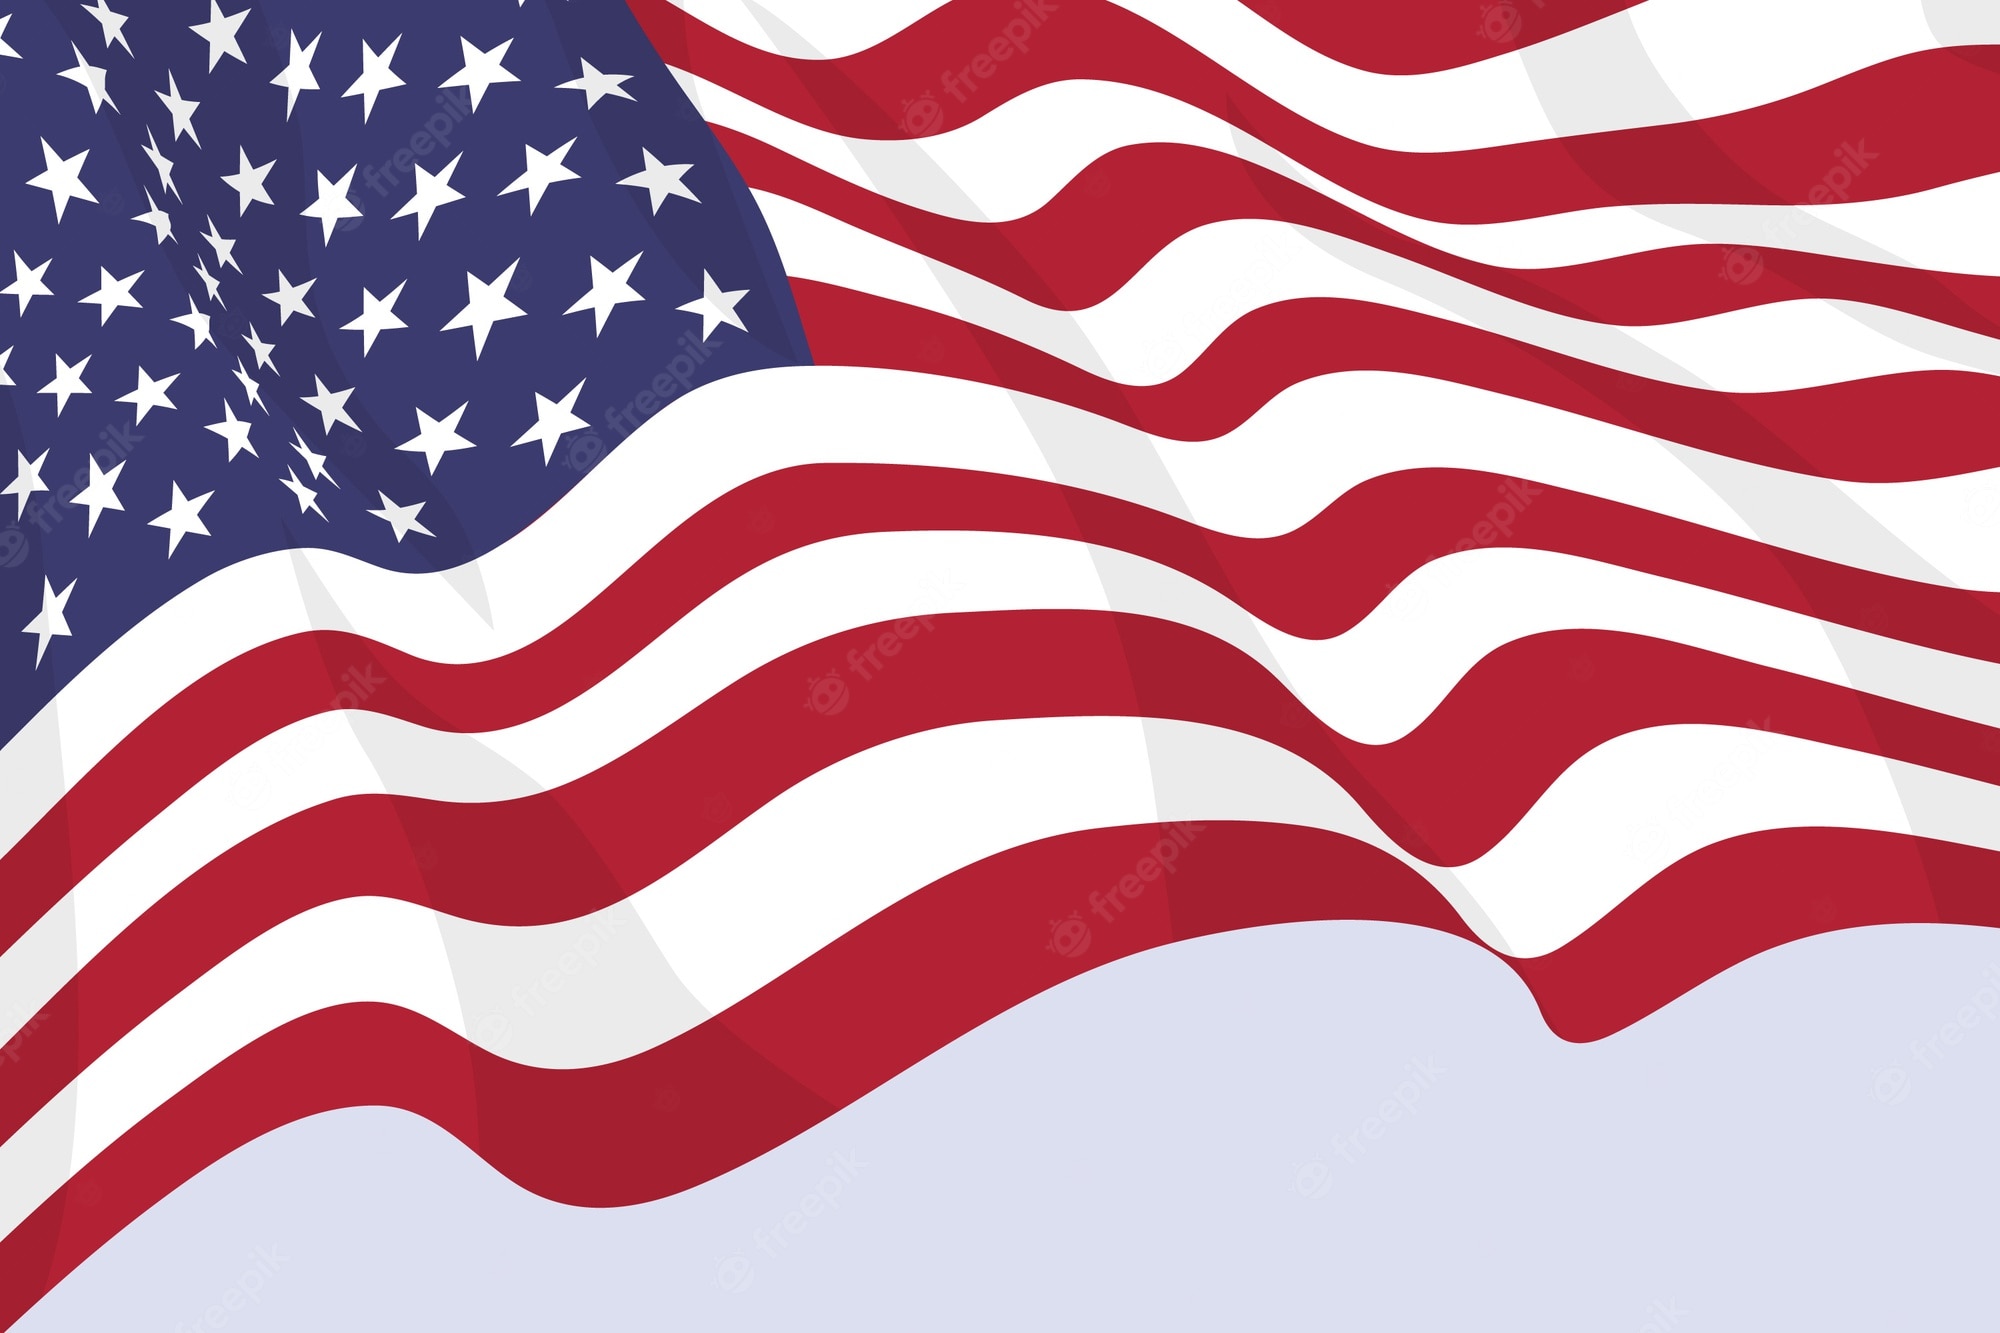 US Flag Blank Meme Template